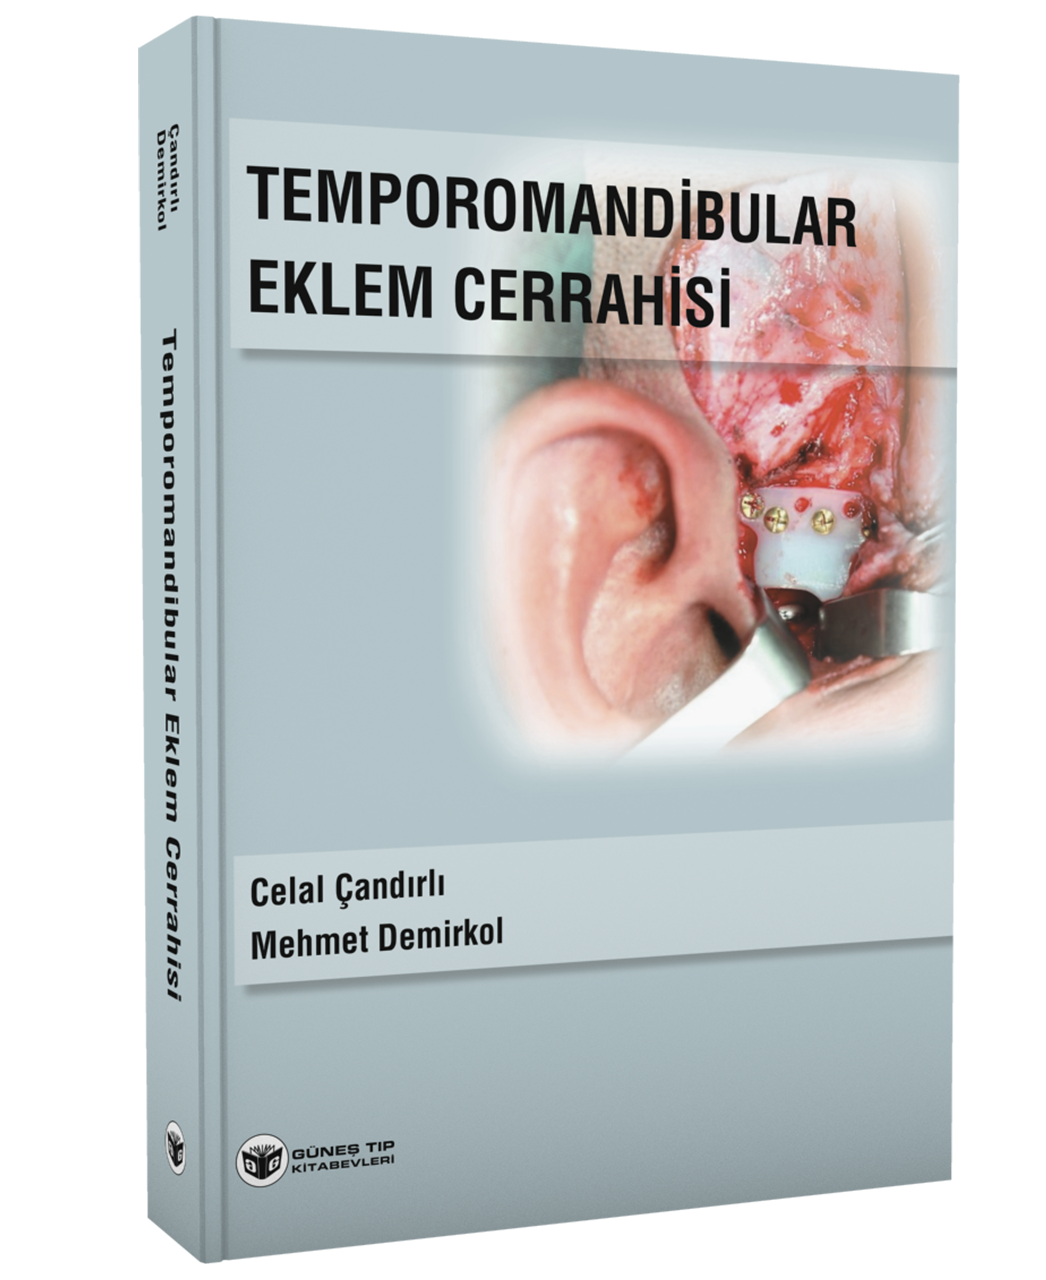 Temporomandibular Eklem Cerrahisi